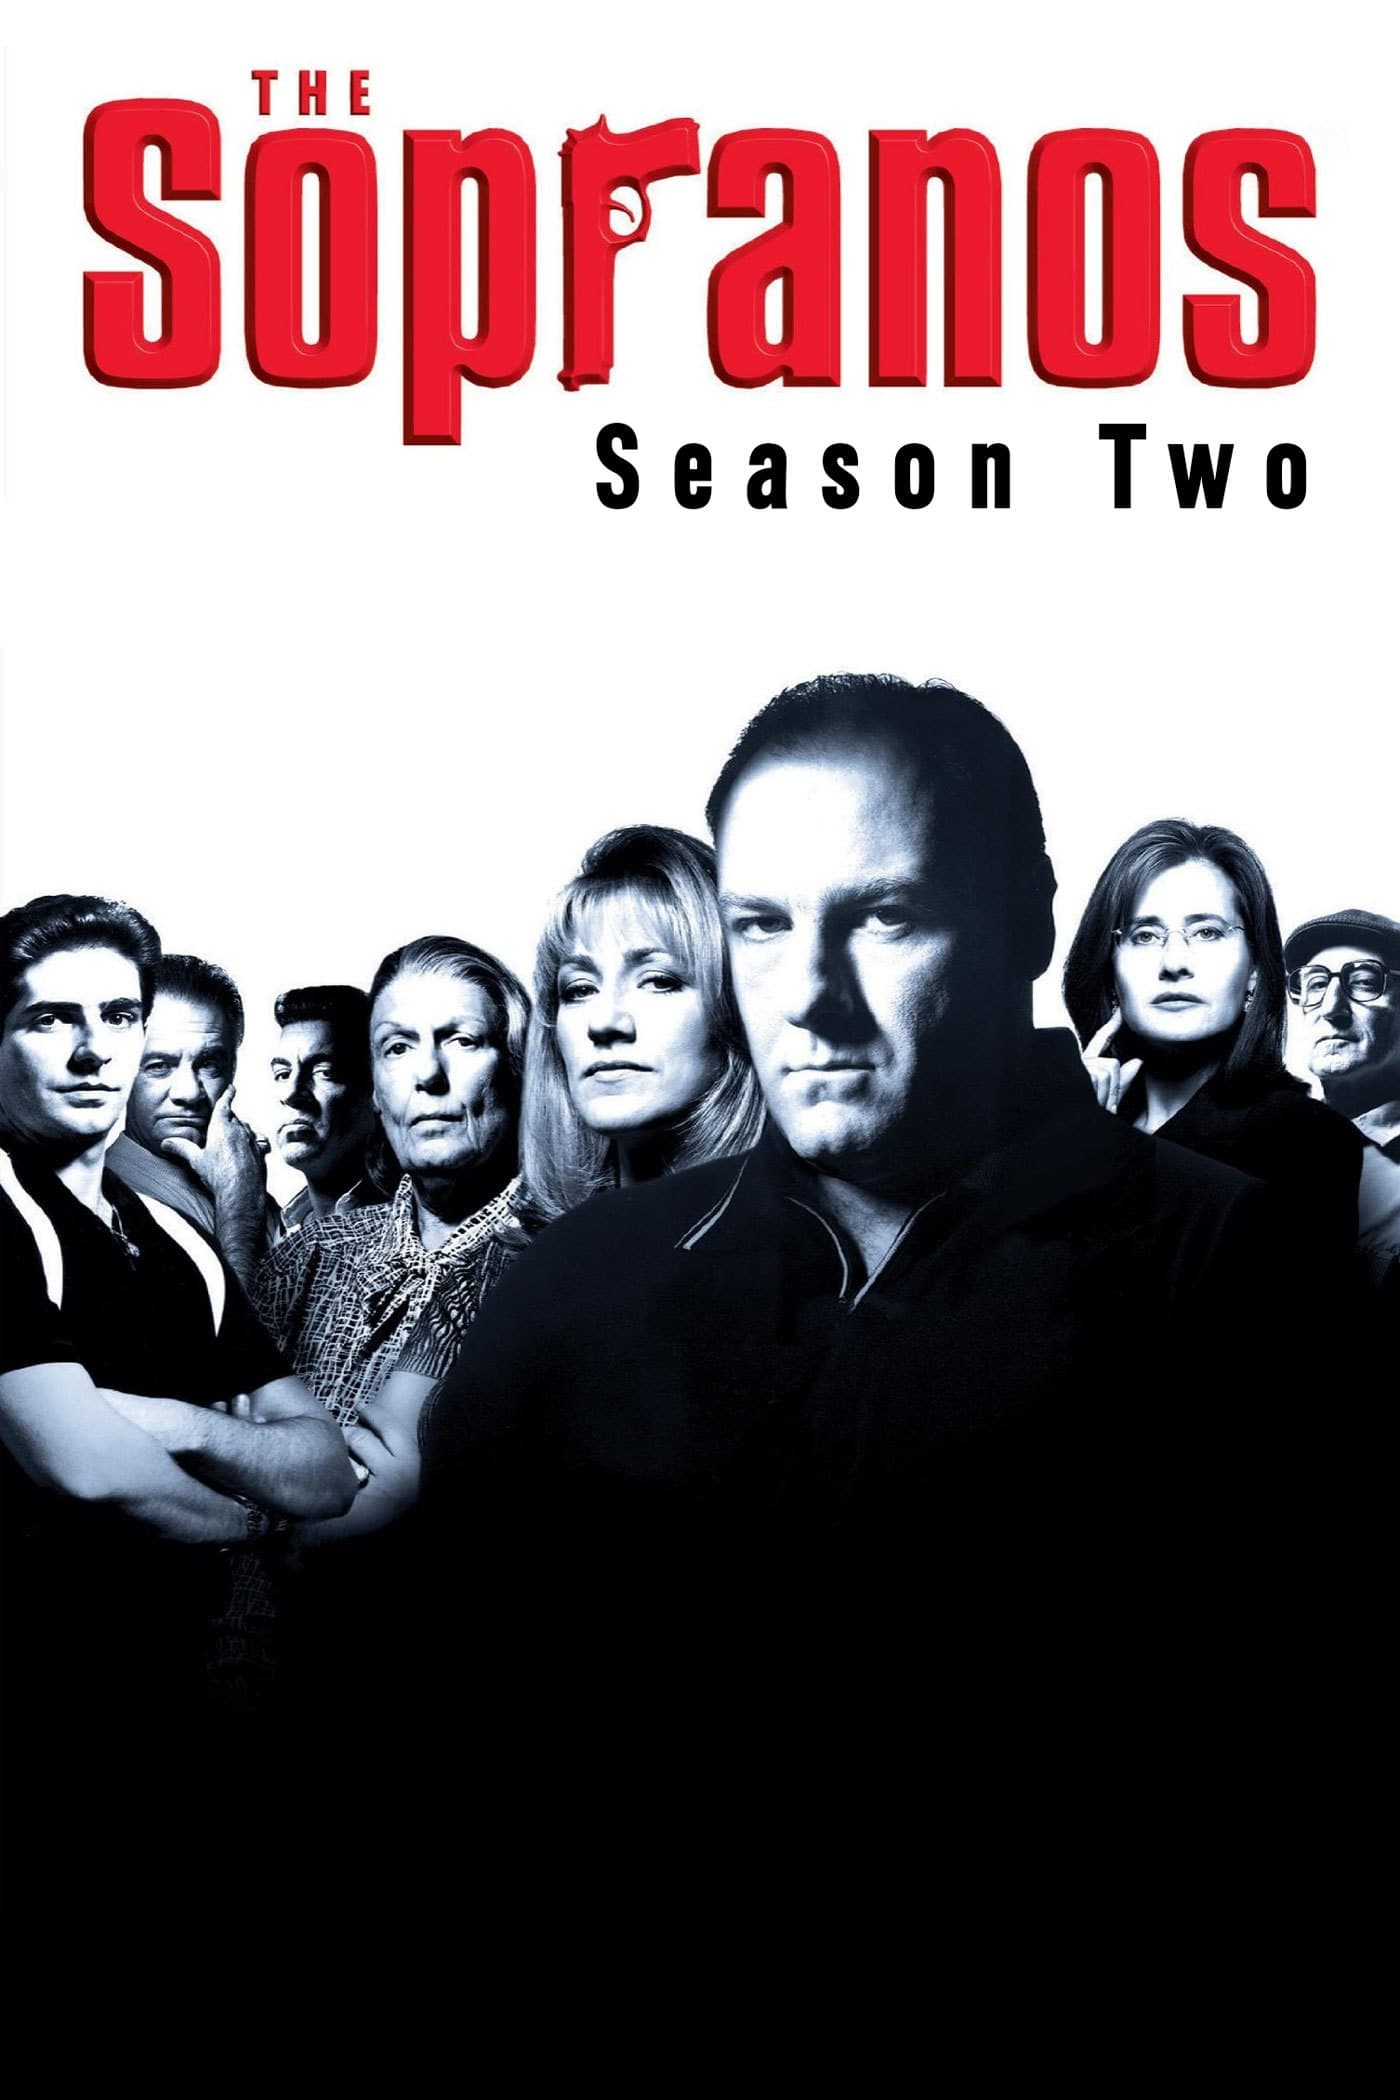 The Sopranos เดอะ โซปราโน่ส์ Season 2